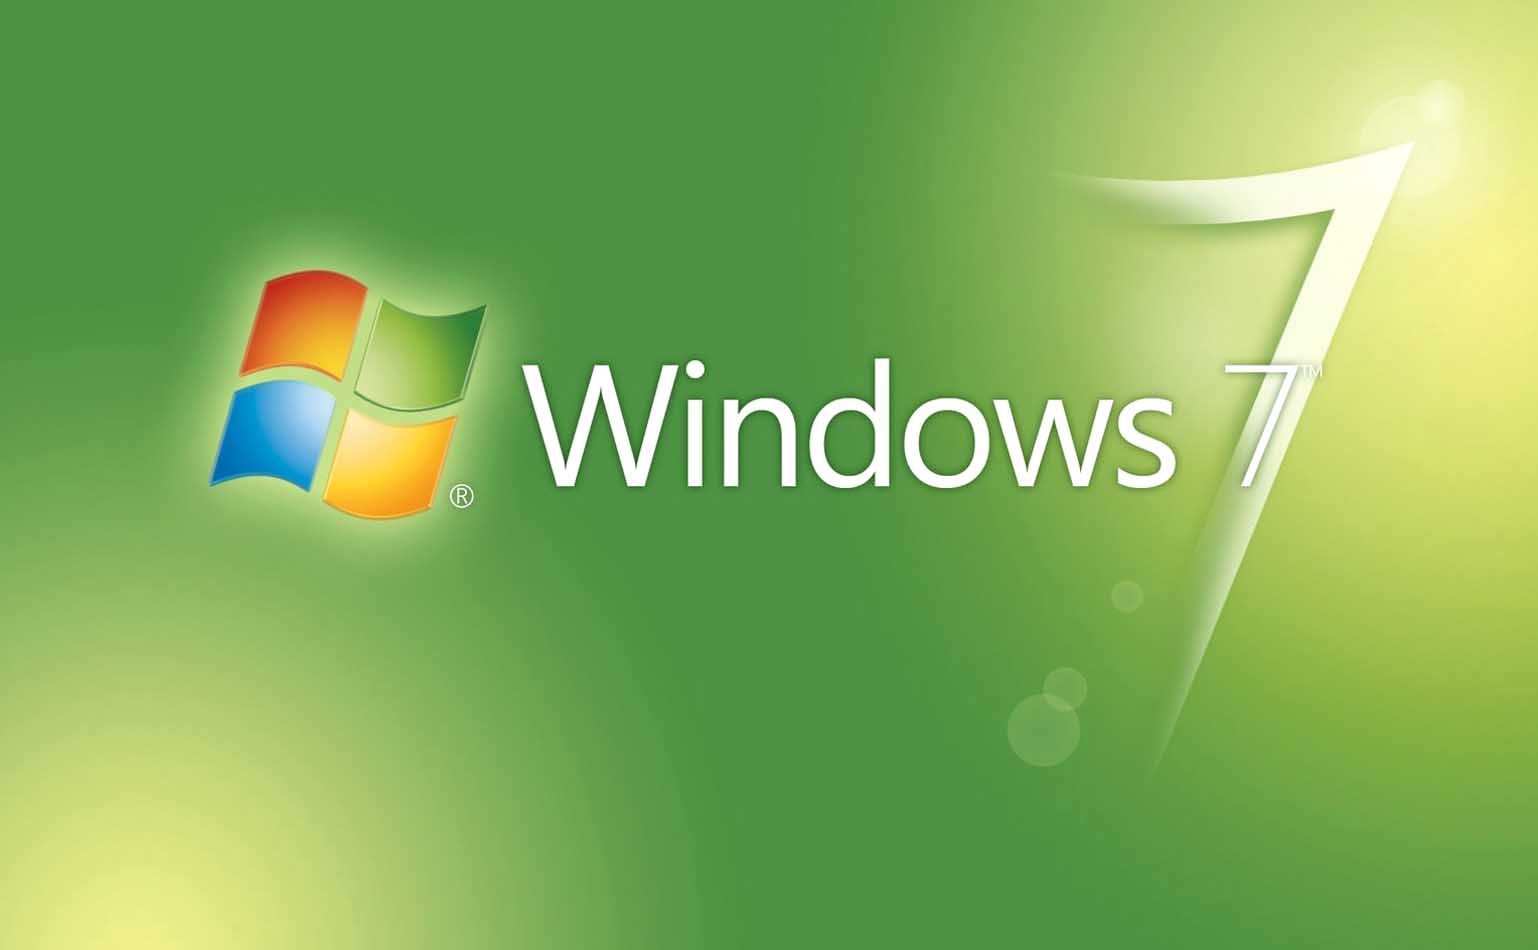 Wallpaper Windows 7 Ultimate Hd 3d For Laptop Image Num 31